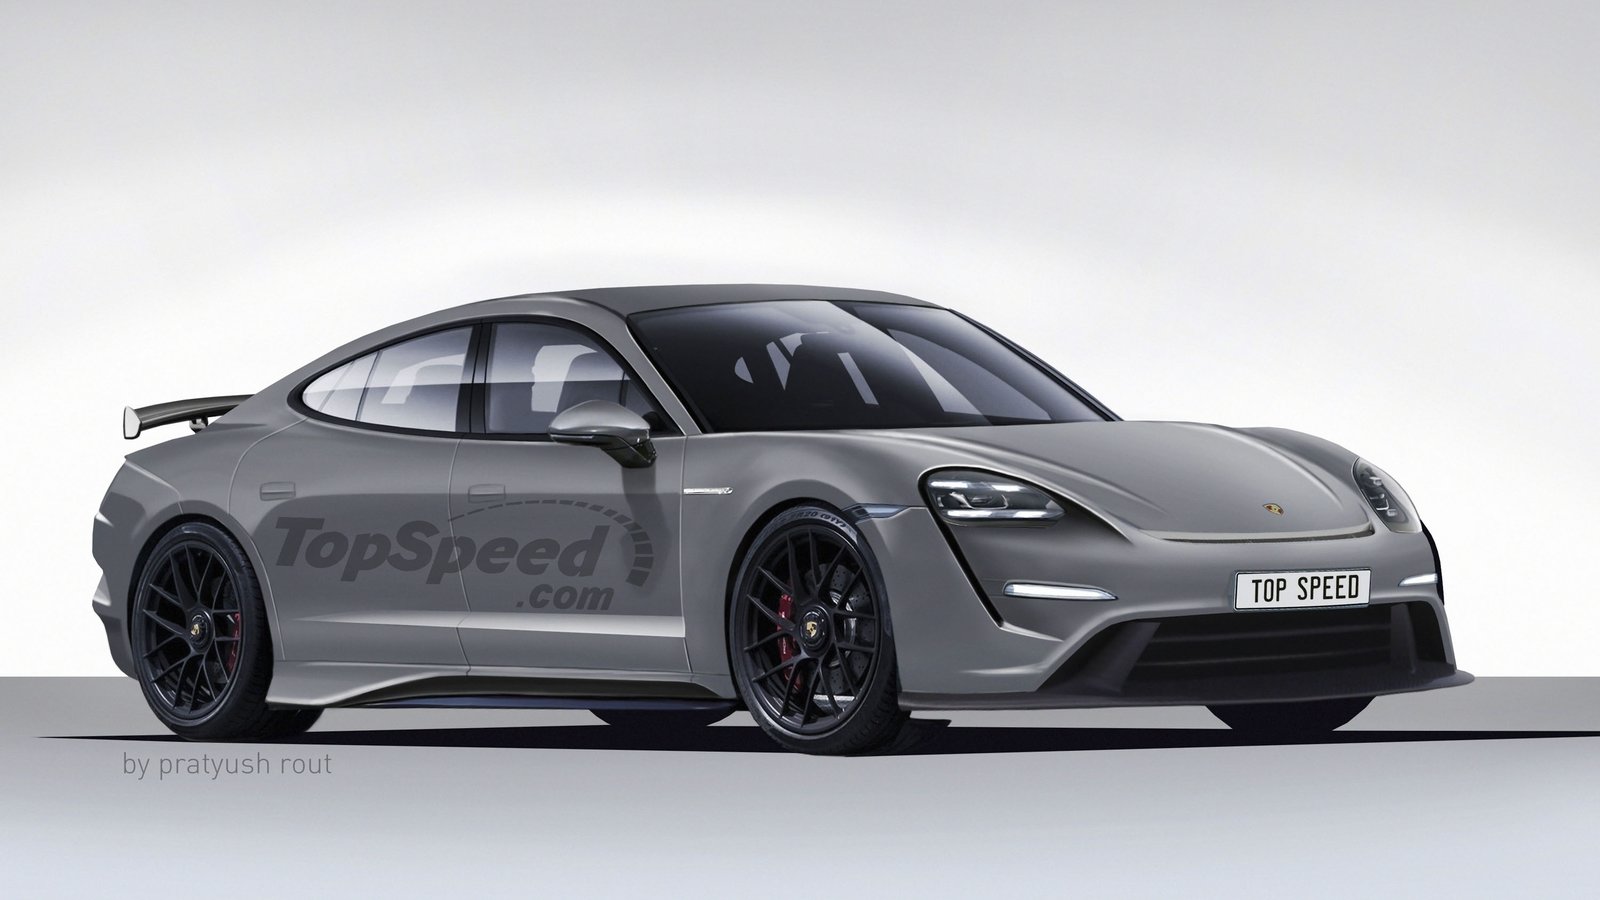 2021 Porsche Mission E GTS